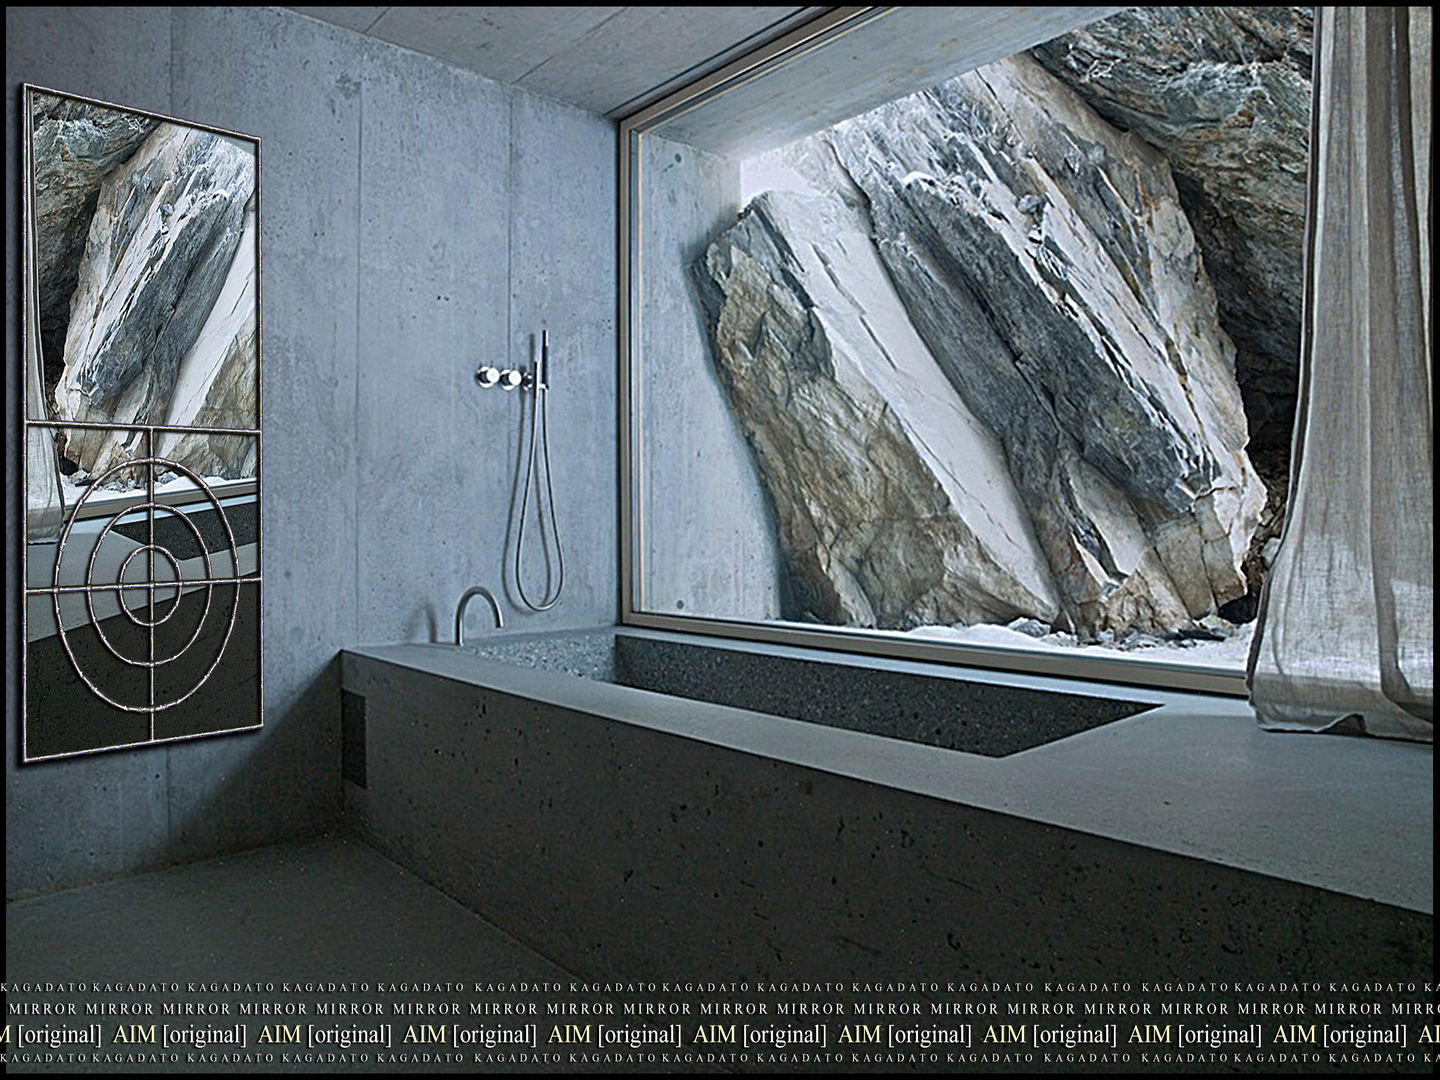 Creative mirror - KAGADATO Industrial style bathroom Mirrors